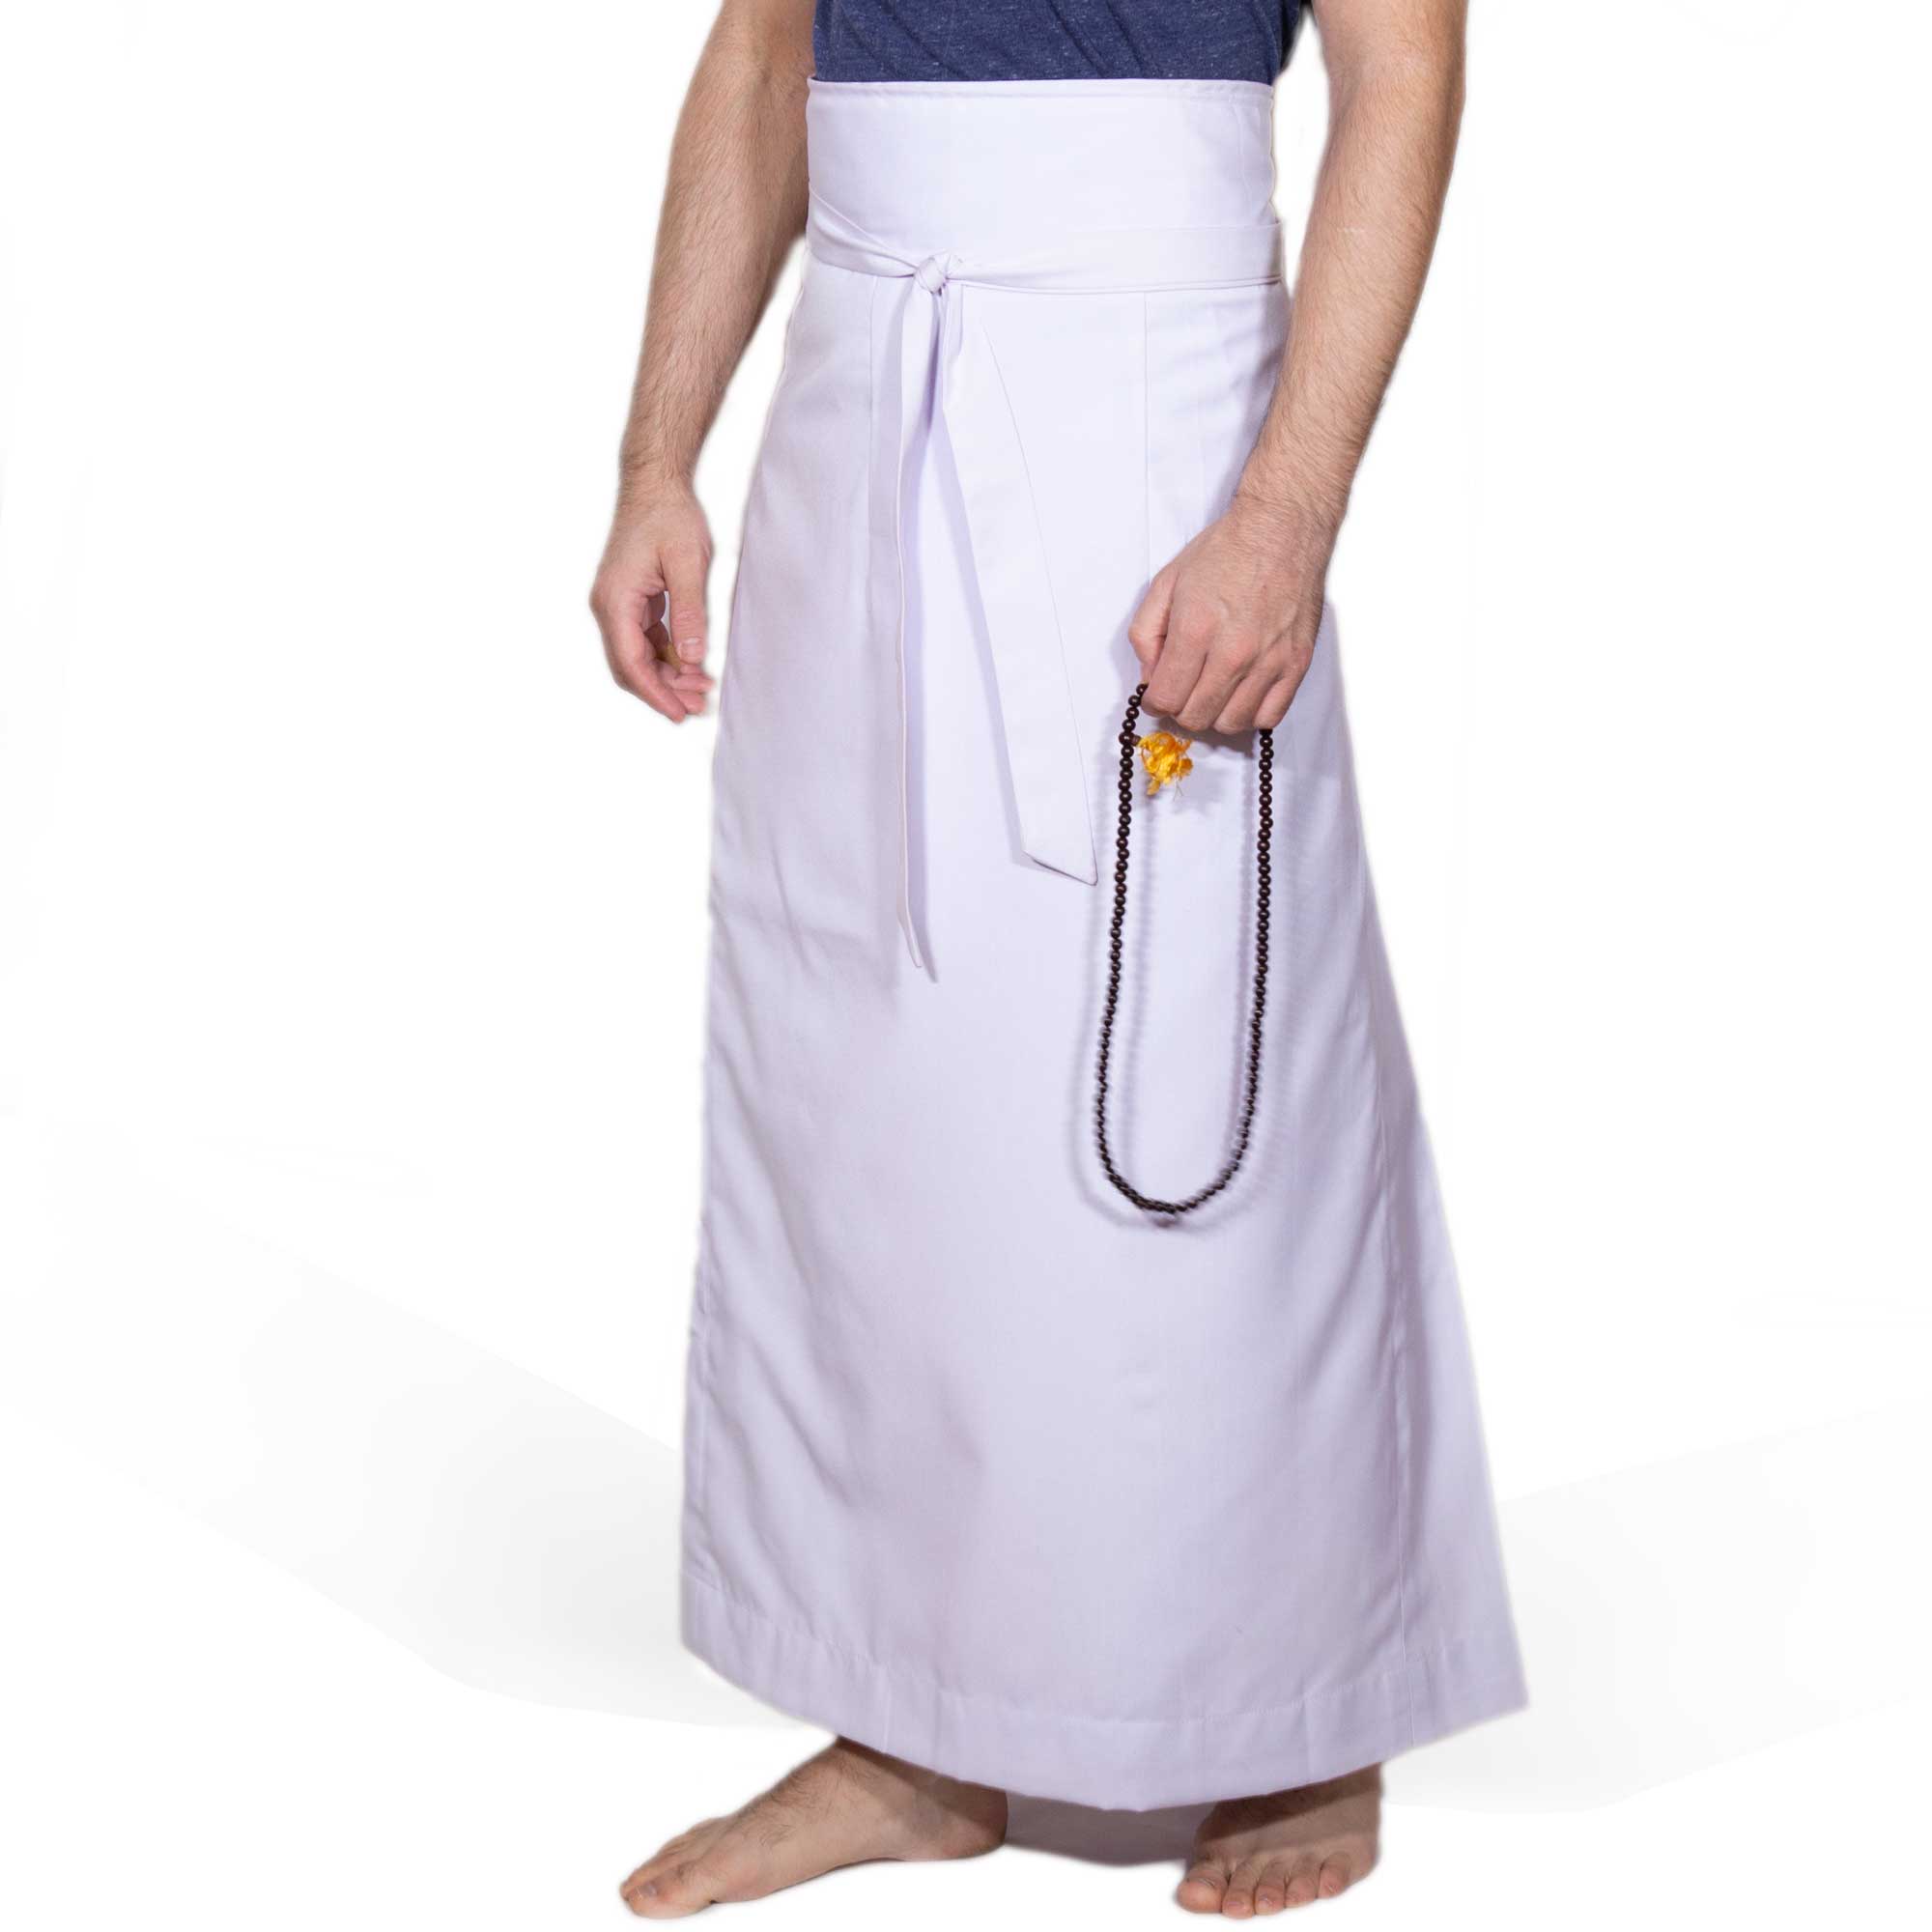 Wraparound Chuba Skirt - Linen Color